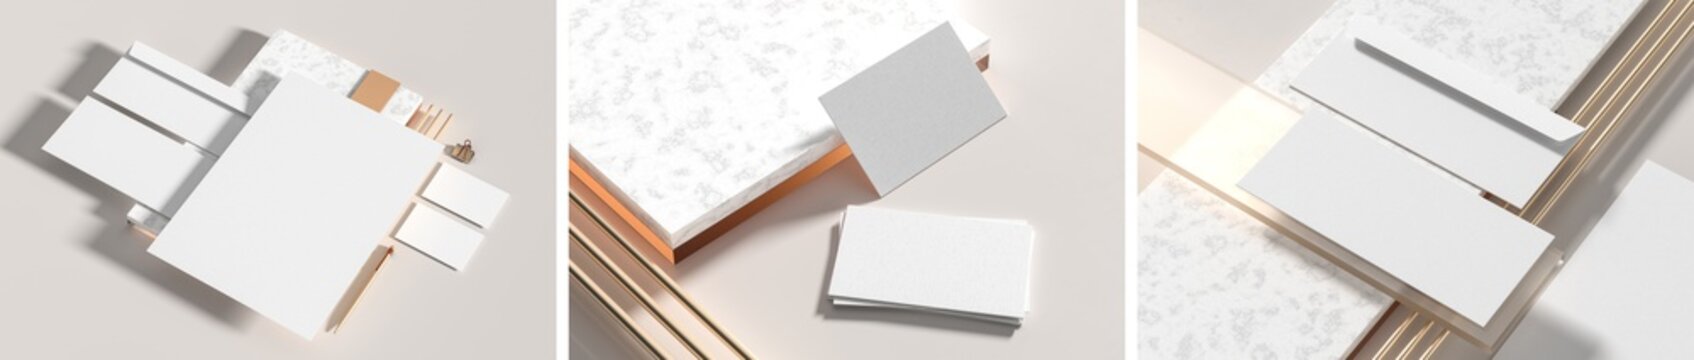 Corporate identity stationery mock up isolated on white marbel background. Mock up for branding identity. 3D illustration